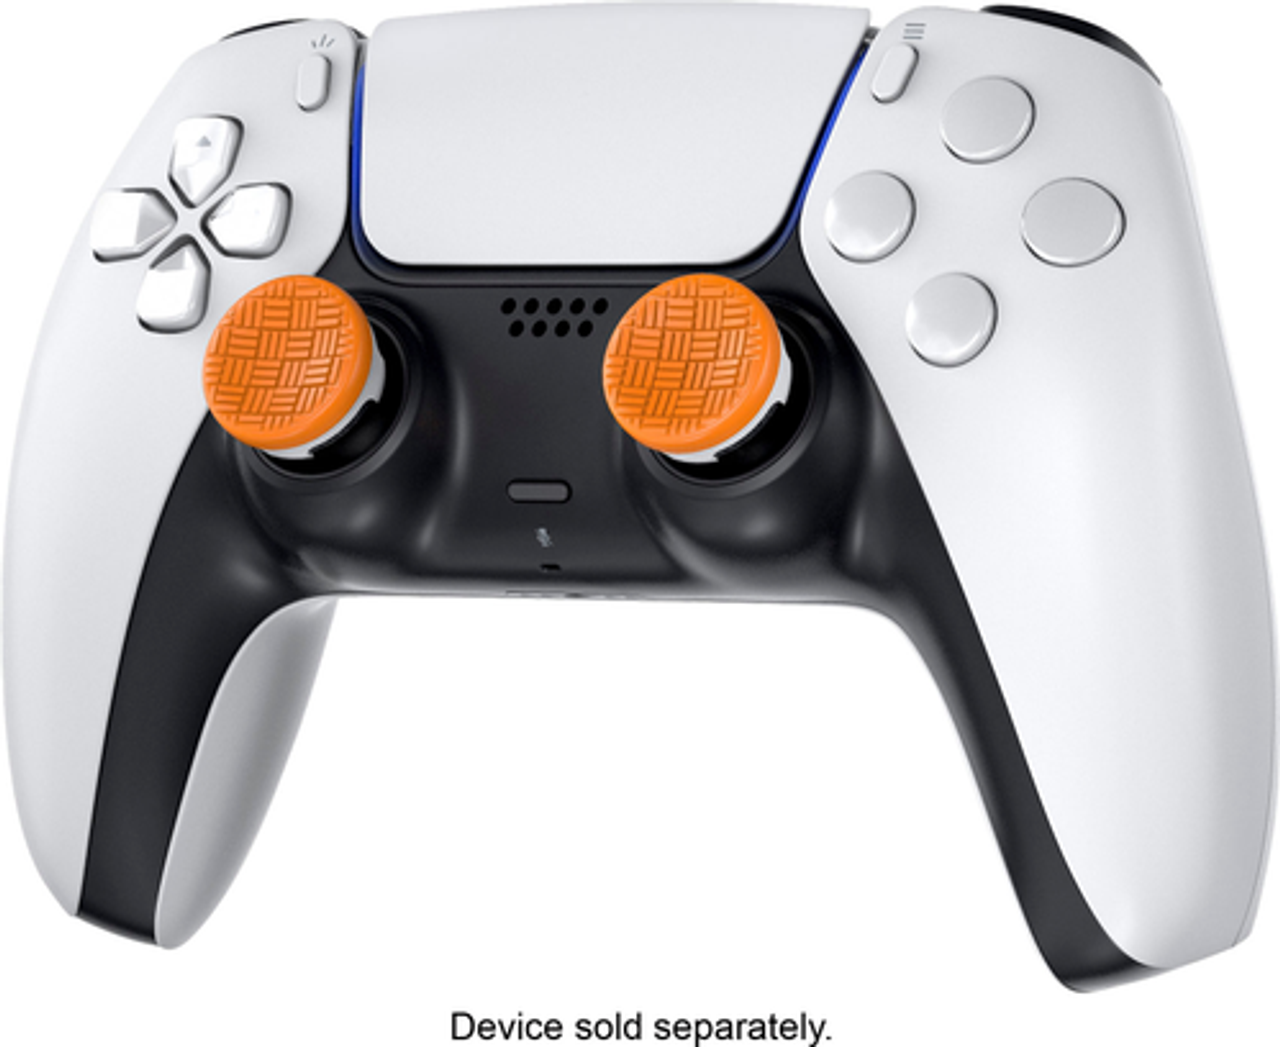 KontrolFreek - Sports Omni Thumbsticks, PlayStation 5 - Orange/White